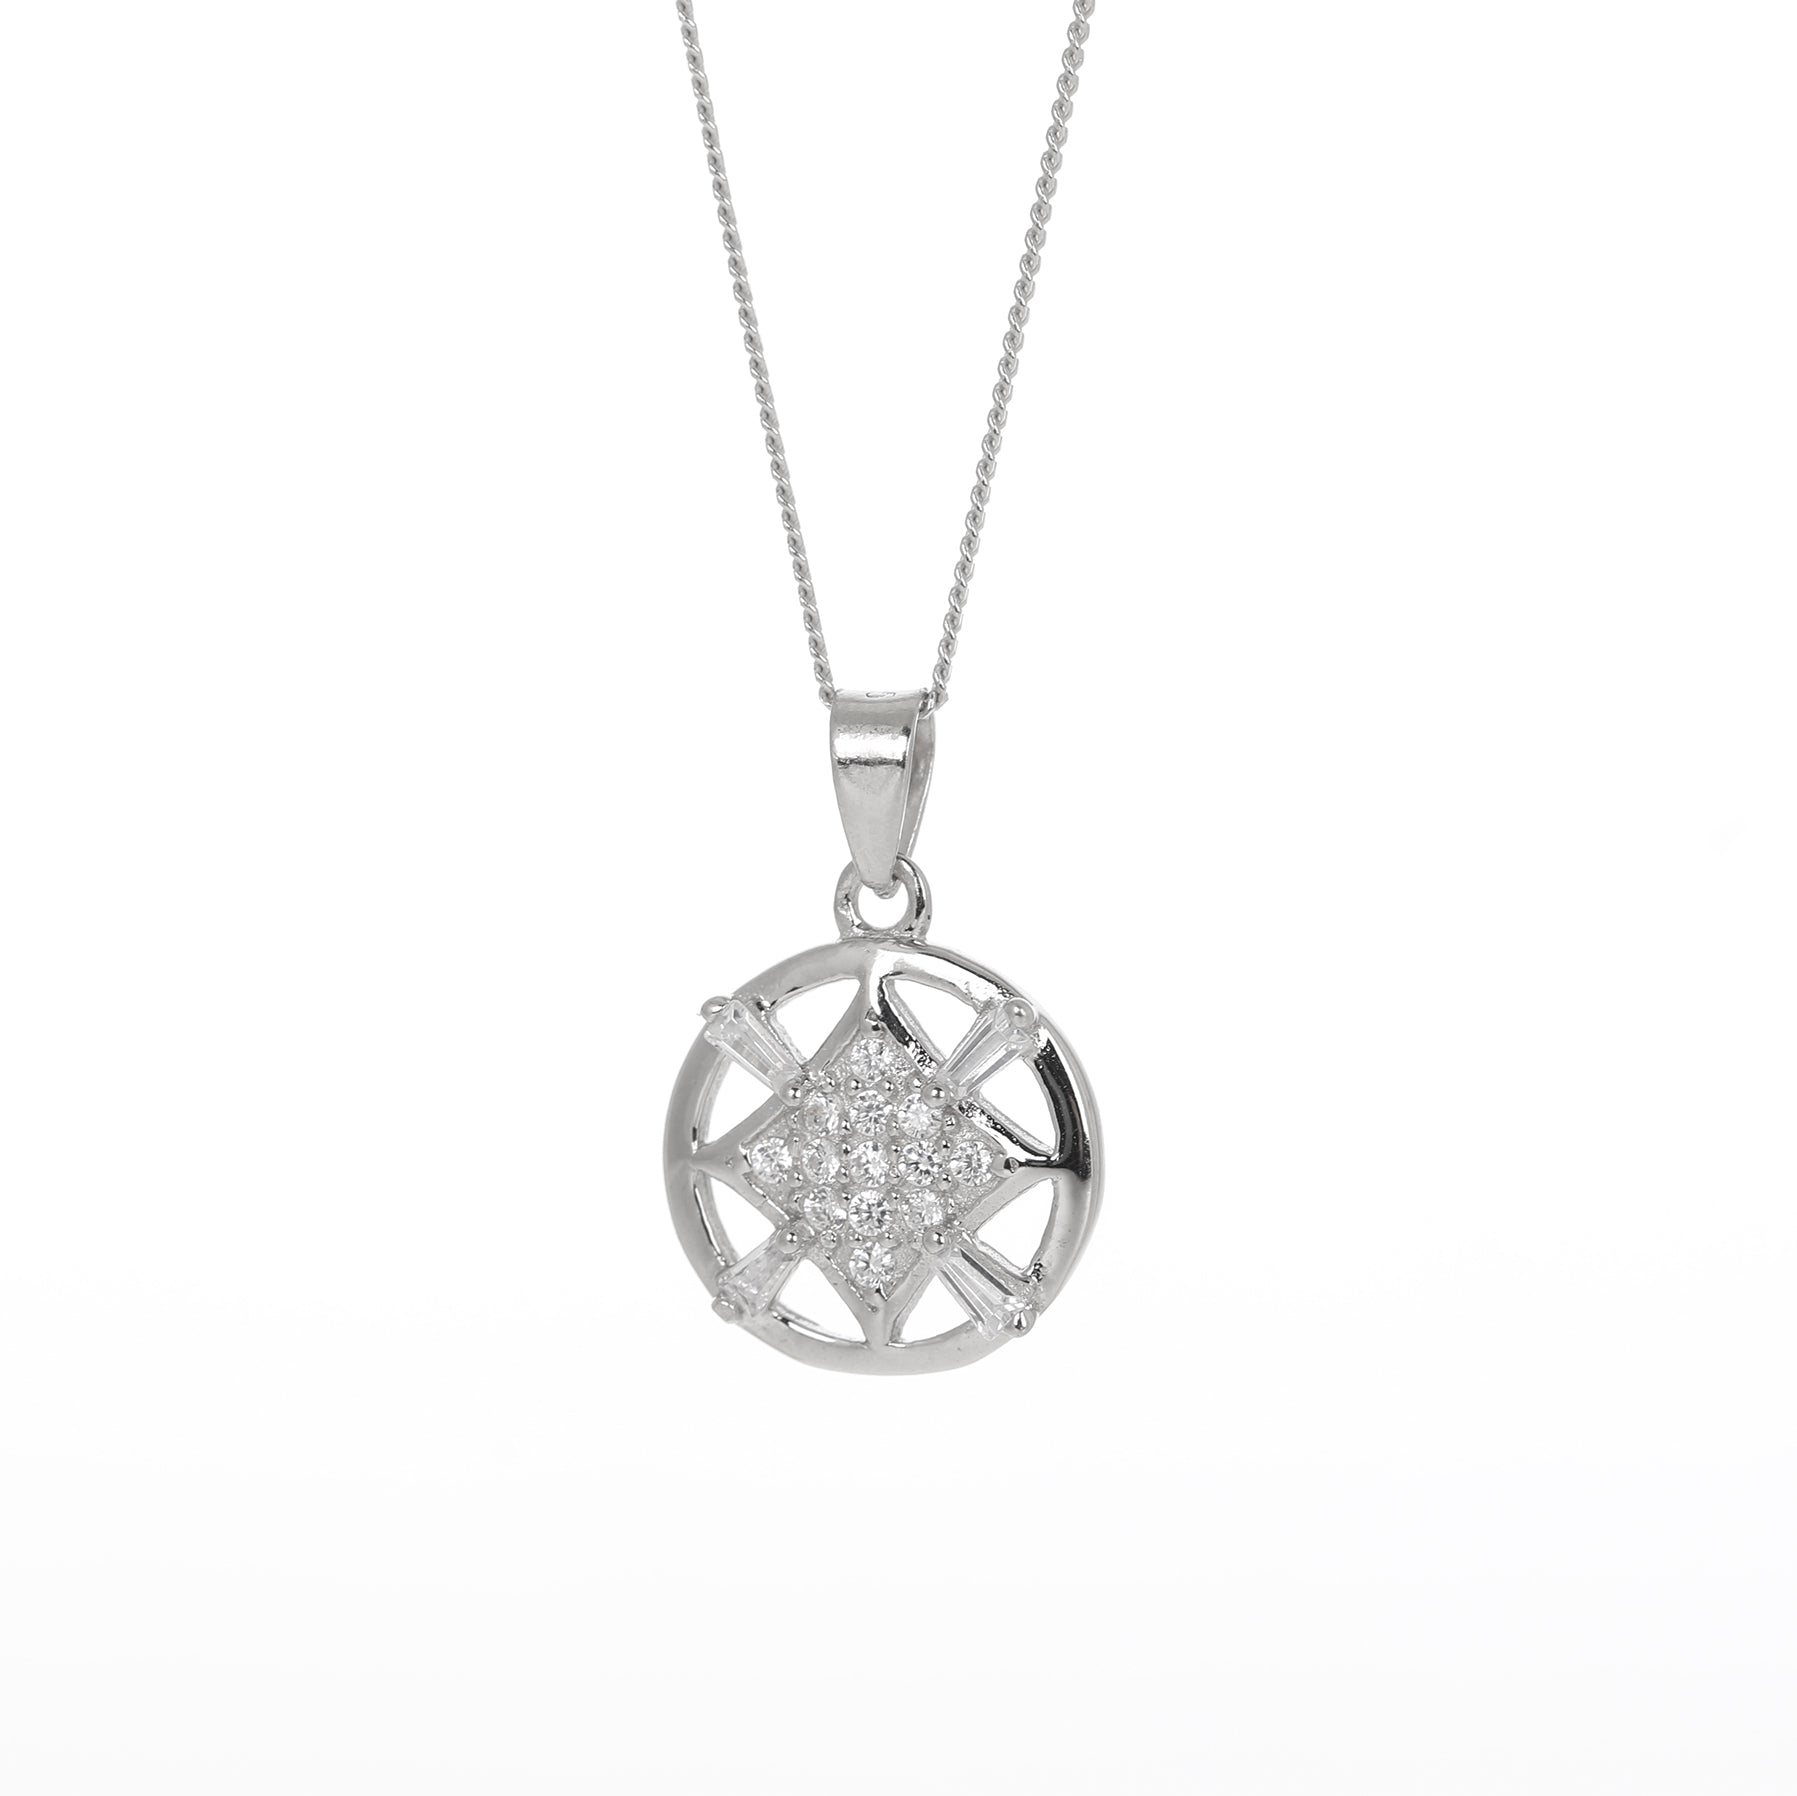 Open circle and diamond pendant